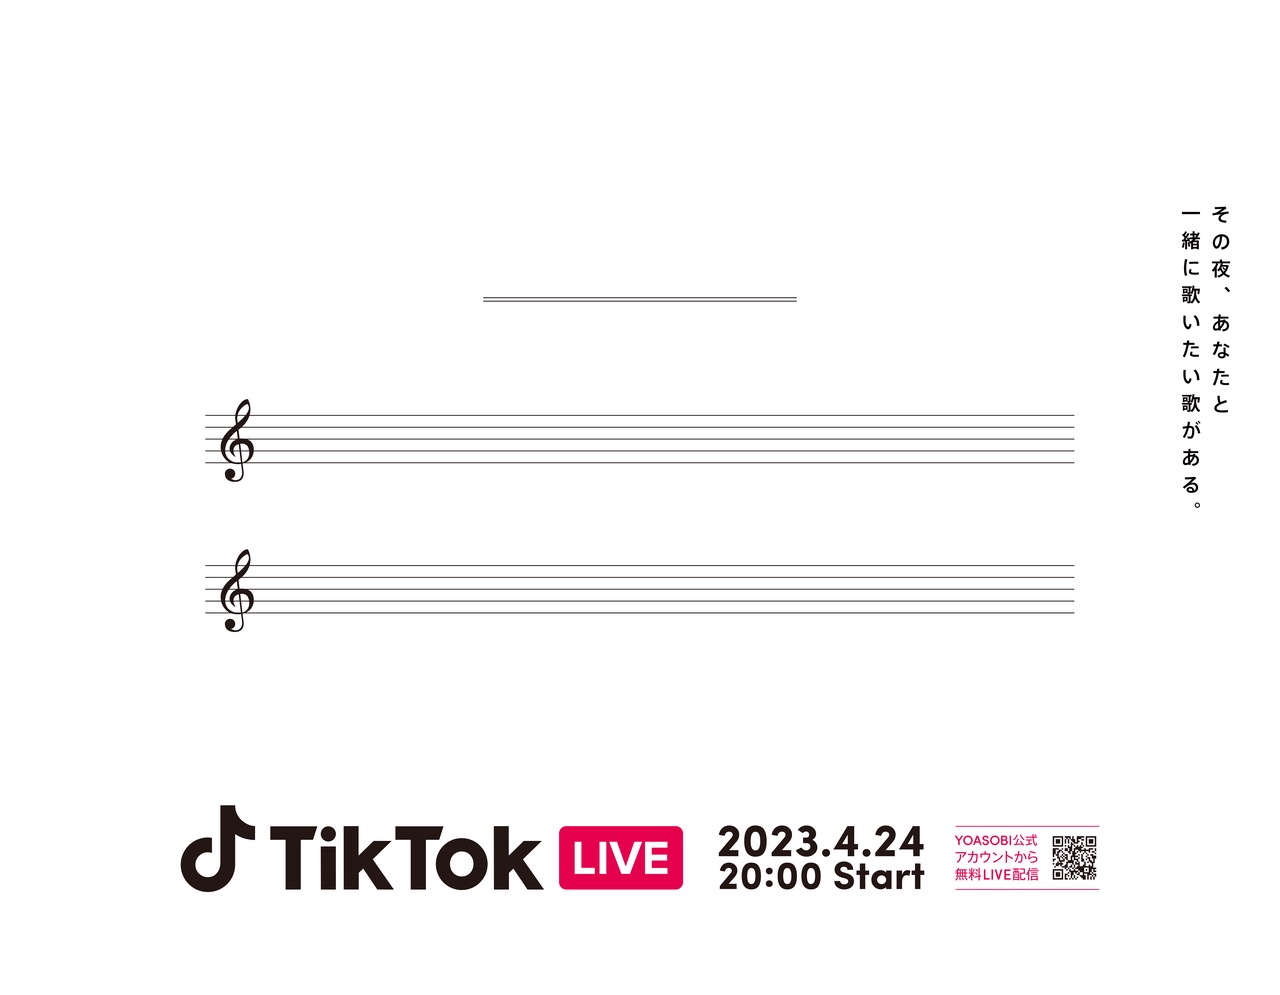 YOASOBI、『TikTok LIVE』記念特別コラボムービー公開など3つの施策がスタート - 画像一覧（1/3）